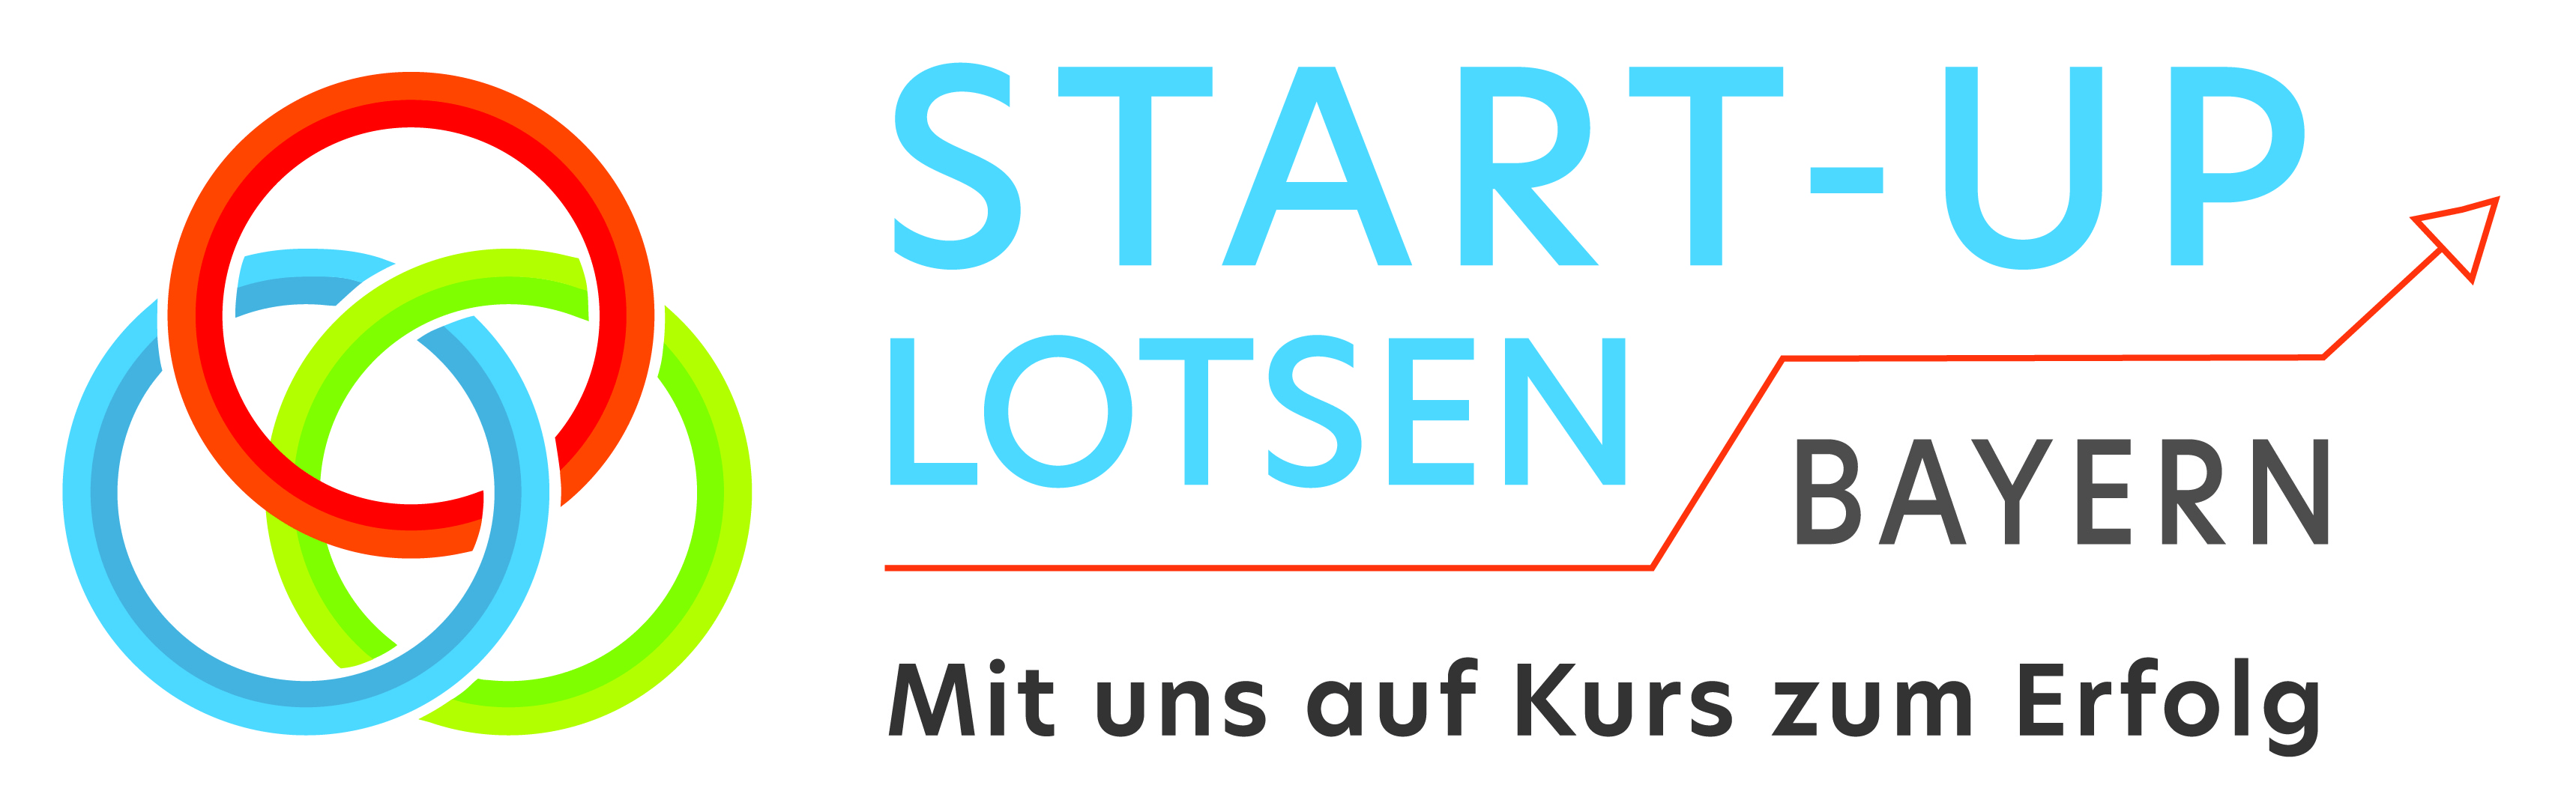 Start-Up Lotsen Bayern, Andreas Becker, Unternehmensberatung